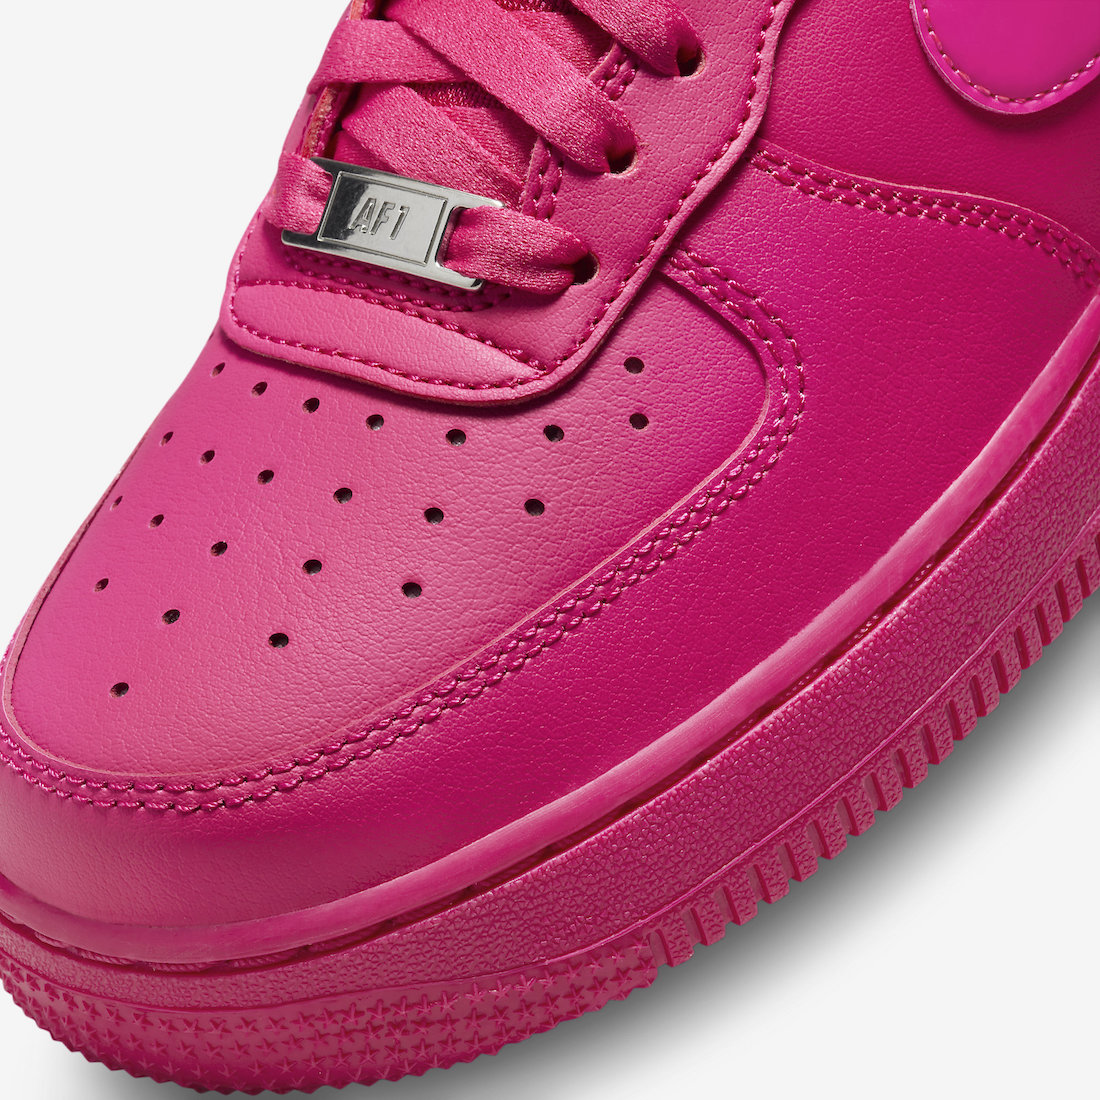 Nike Air Force 1 Low Fireberry Fierce Pink DD8959 600 6